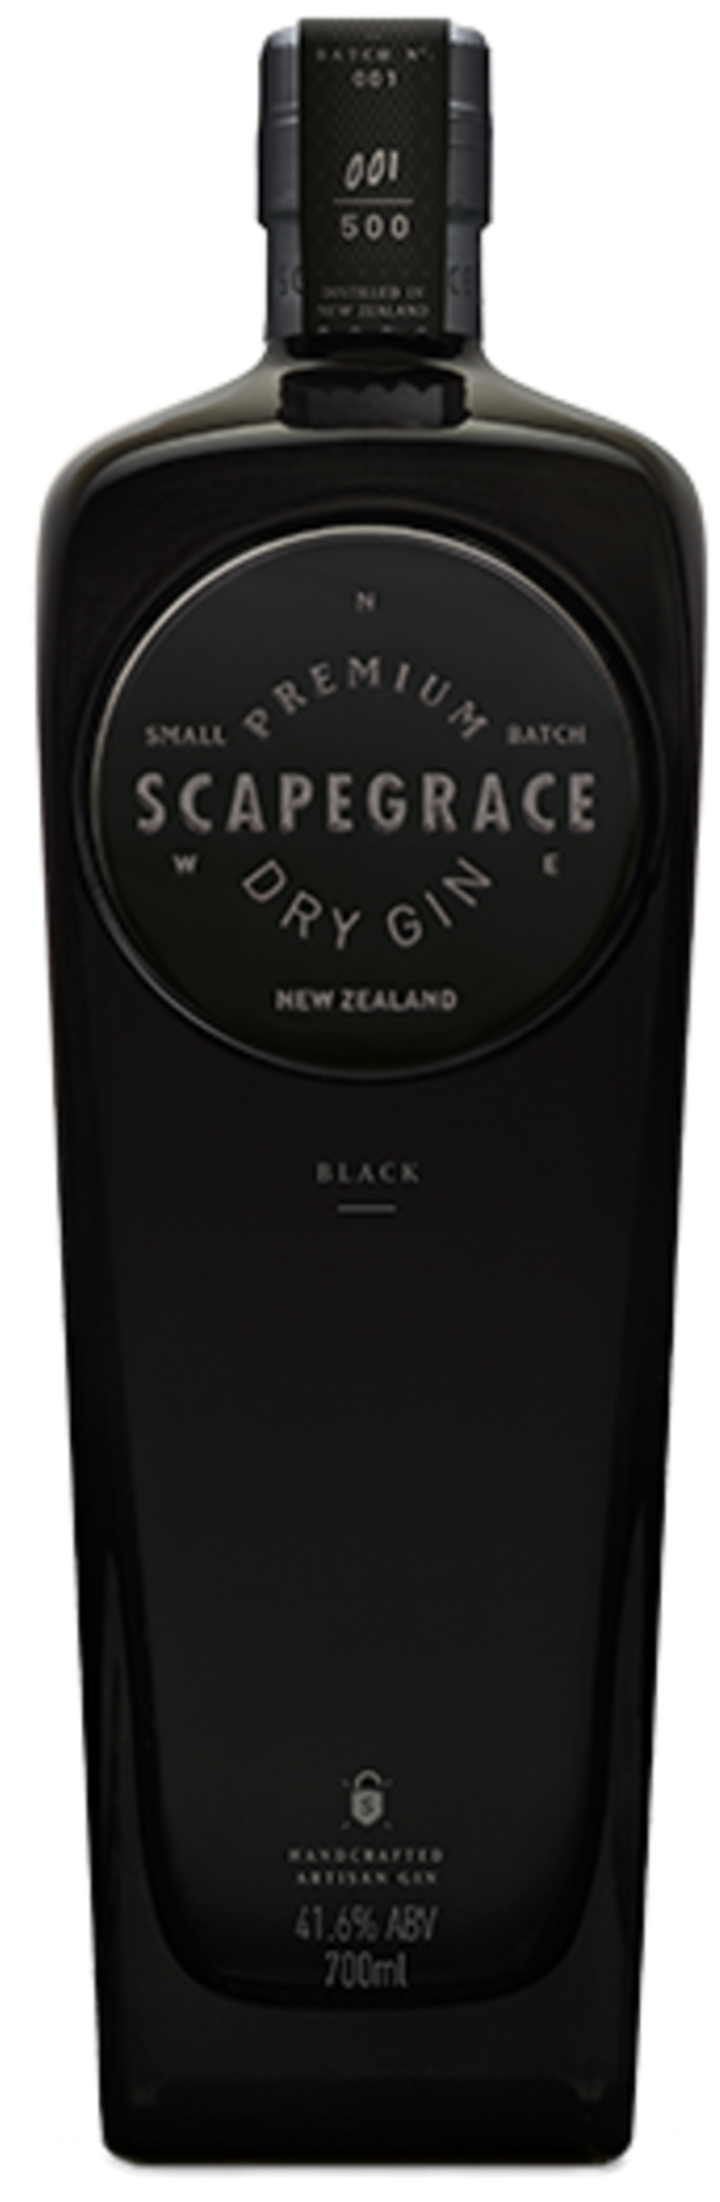 Scapegrace Black Dry Gin 0.7l